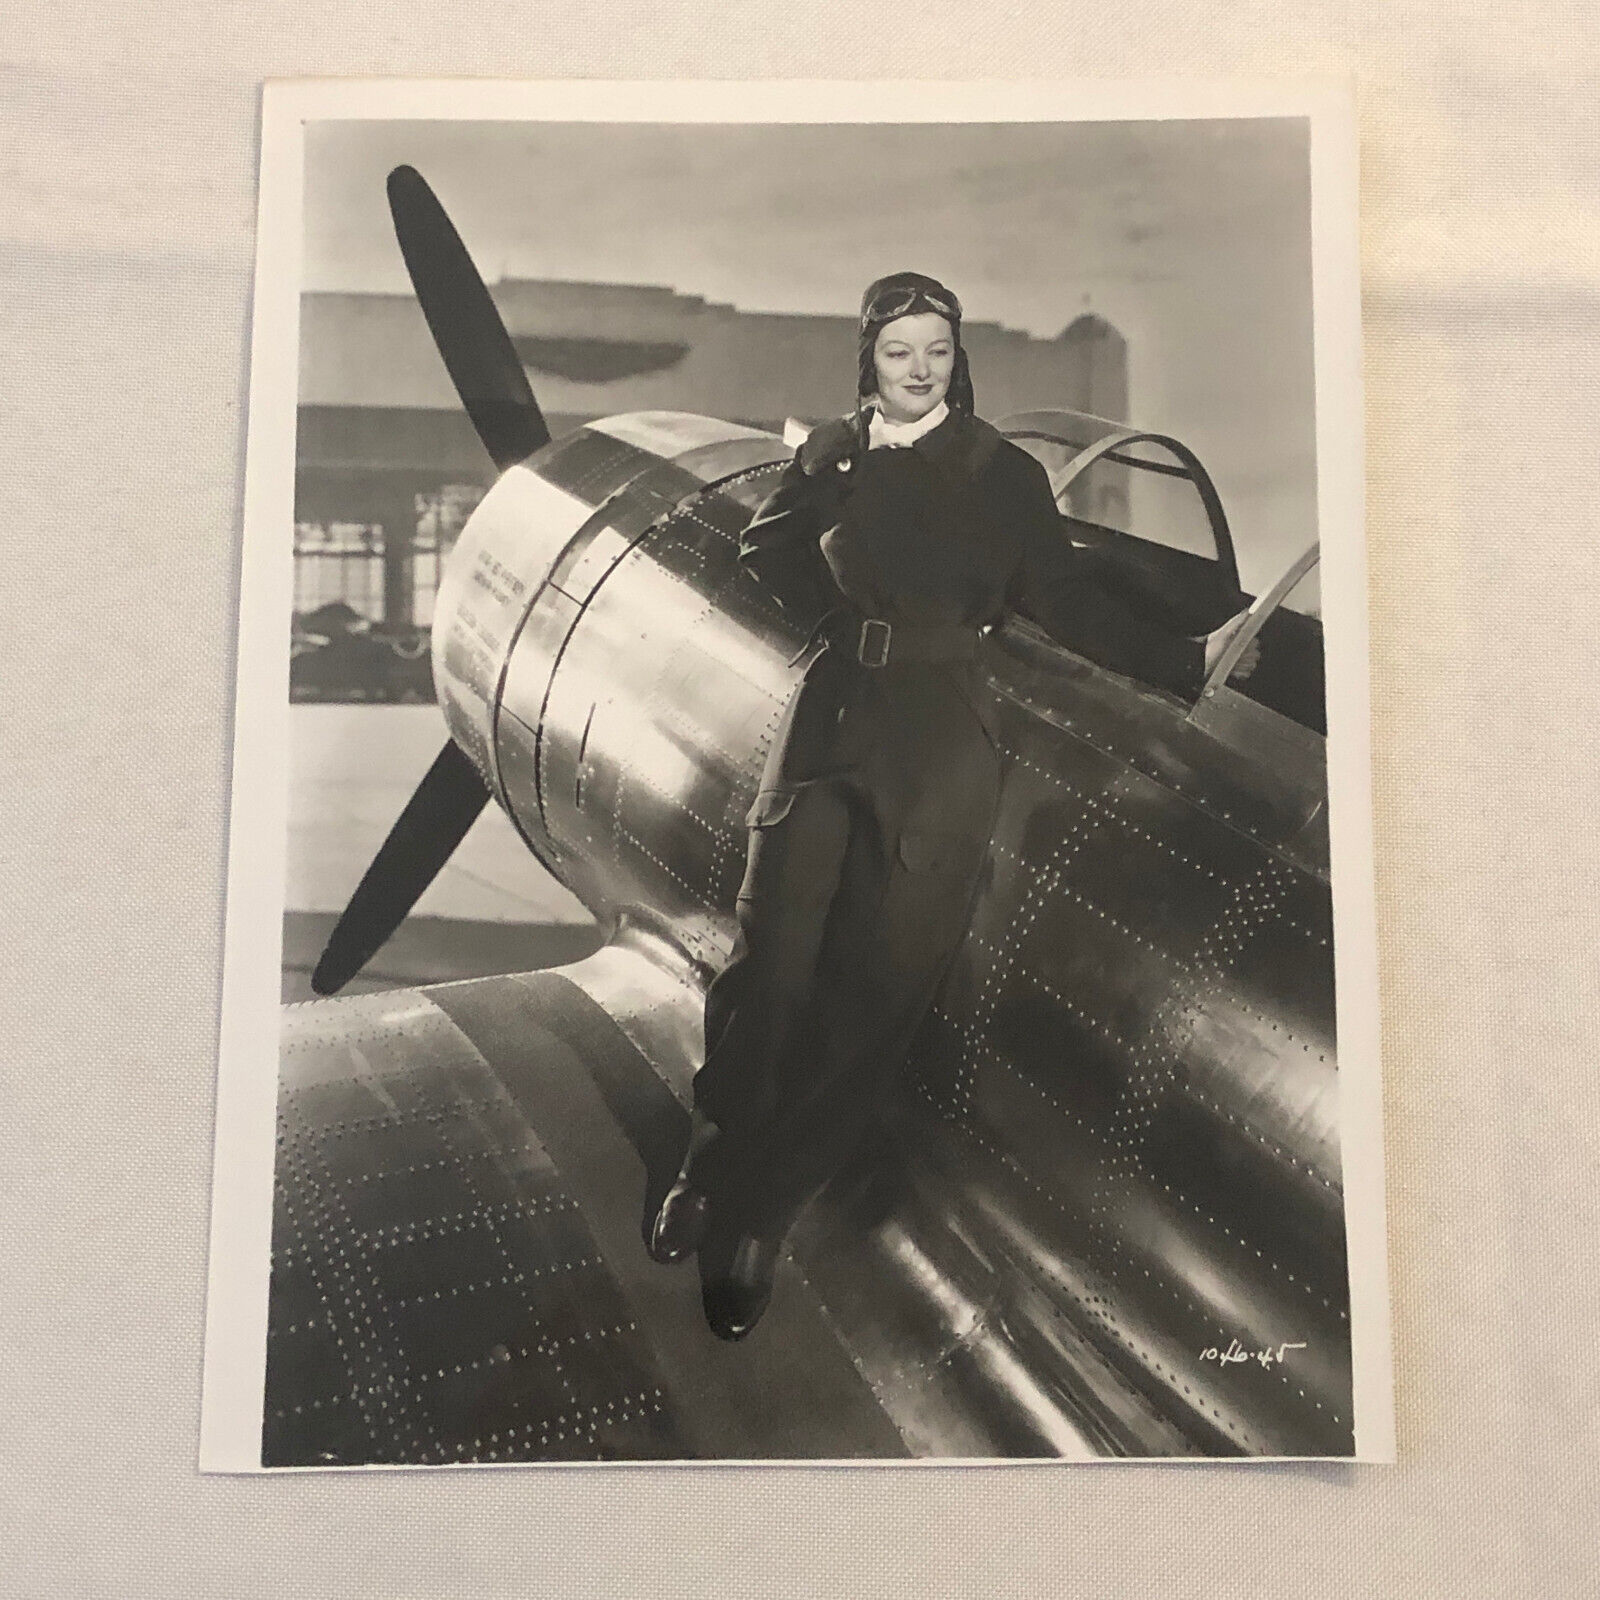 Actress Myrna Loy as Pilot Aviation Aviator Plane Airplane Aircraft Photo